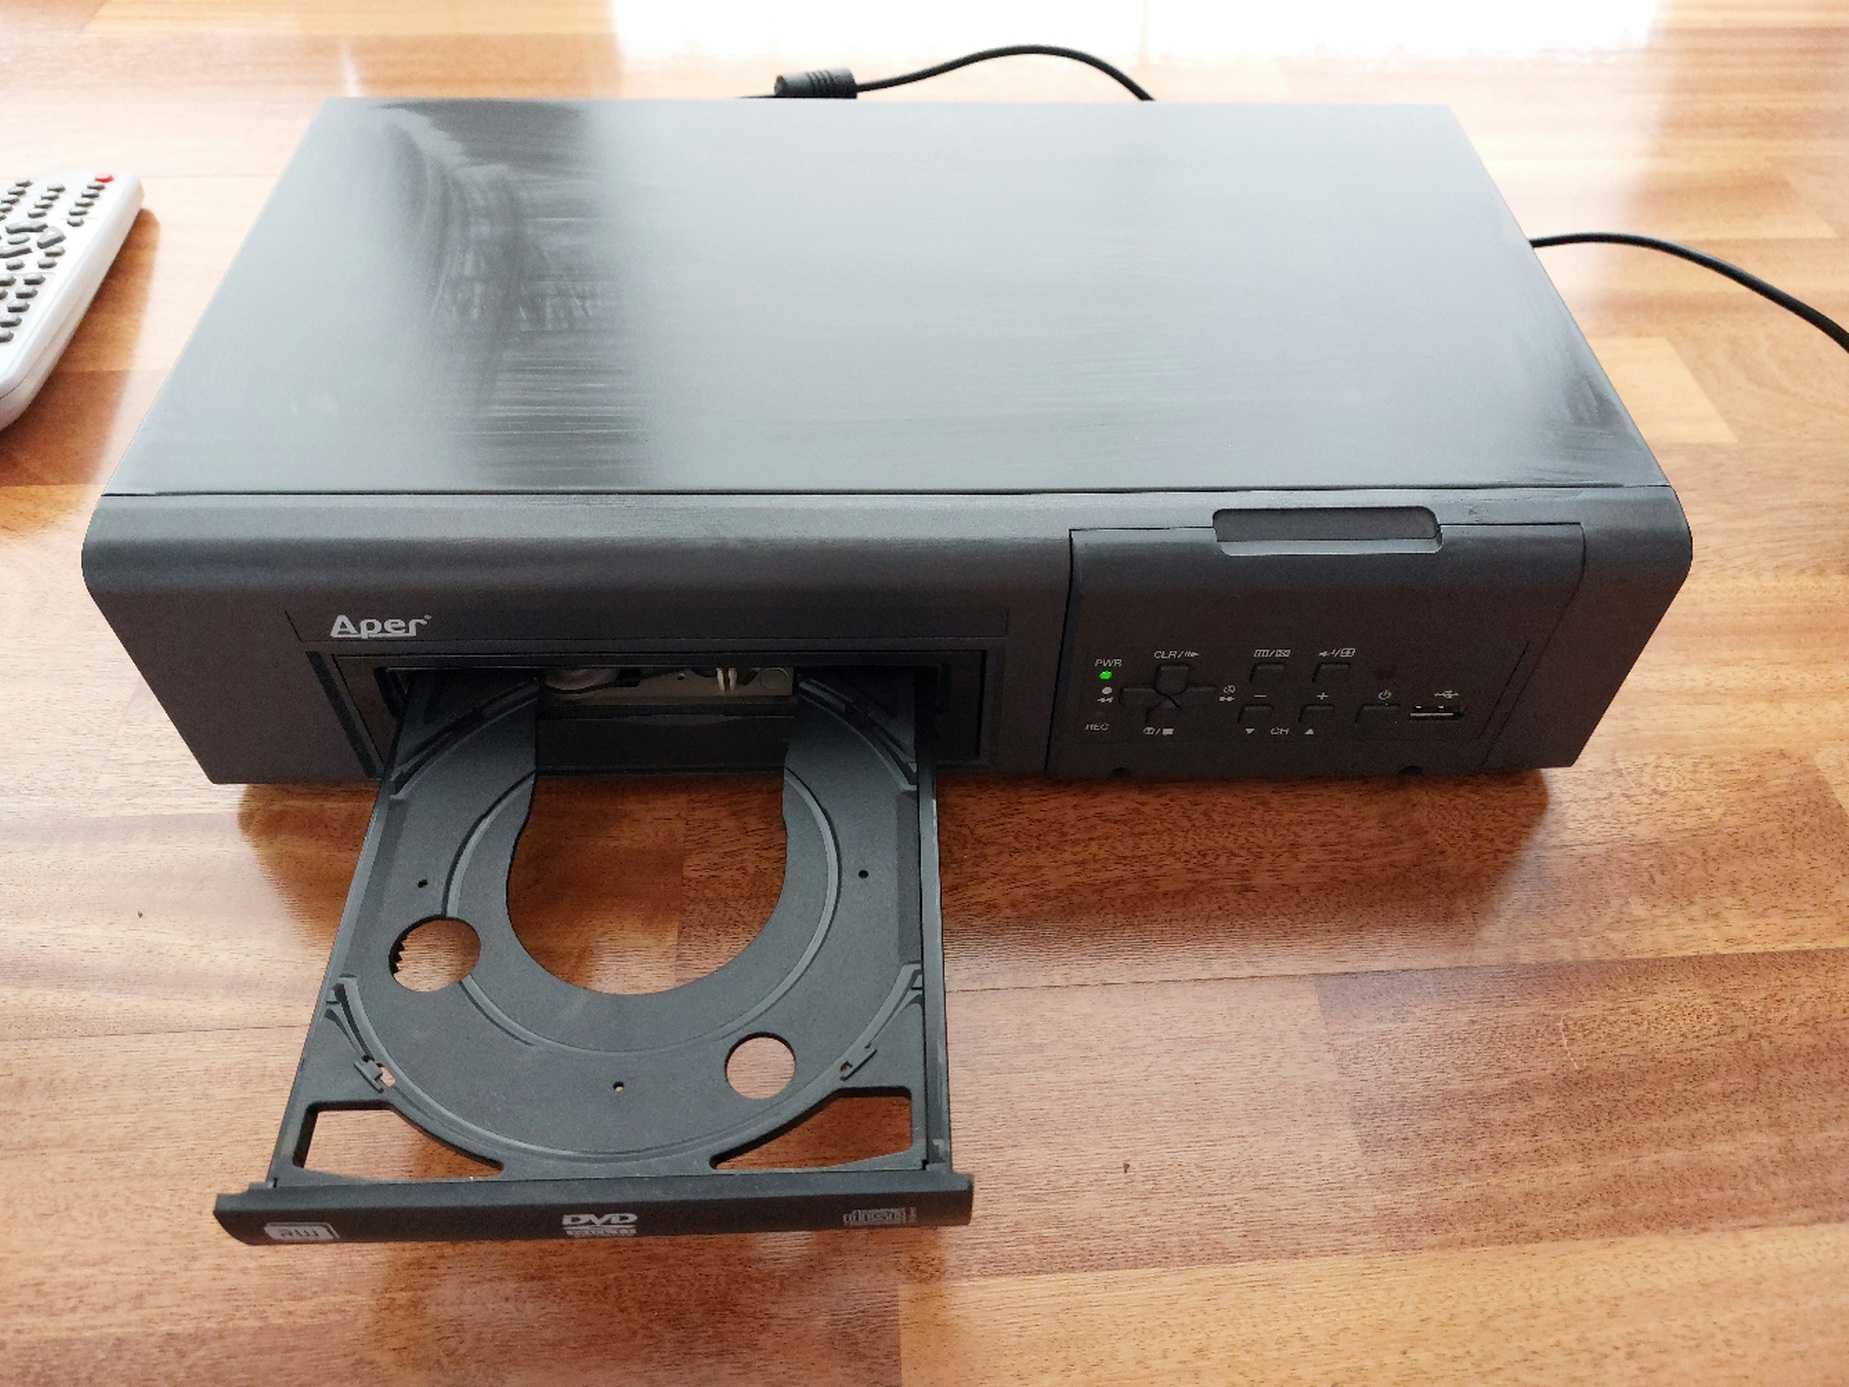 Rejestrator cyfrowy Aper PDR-S2004/DVD na 4 kamery